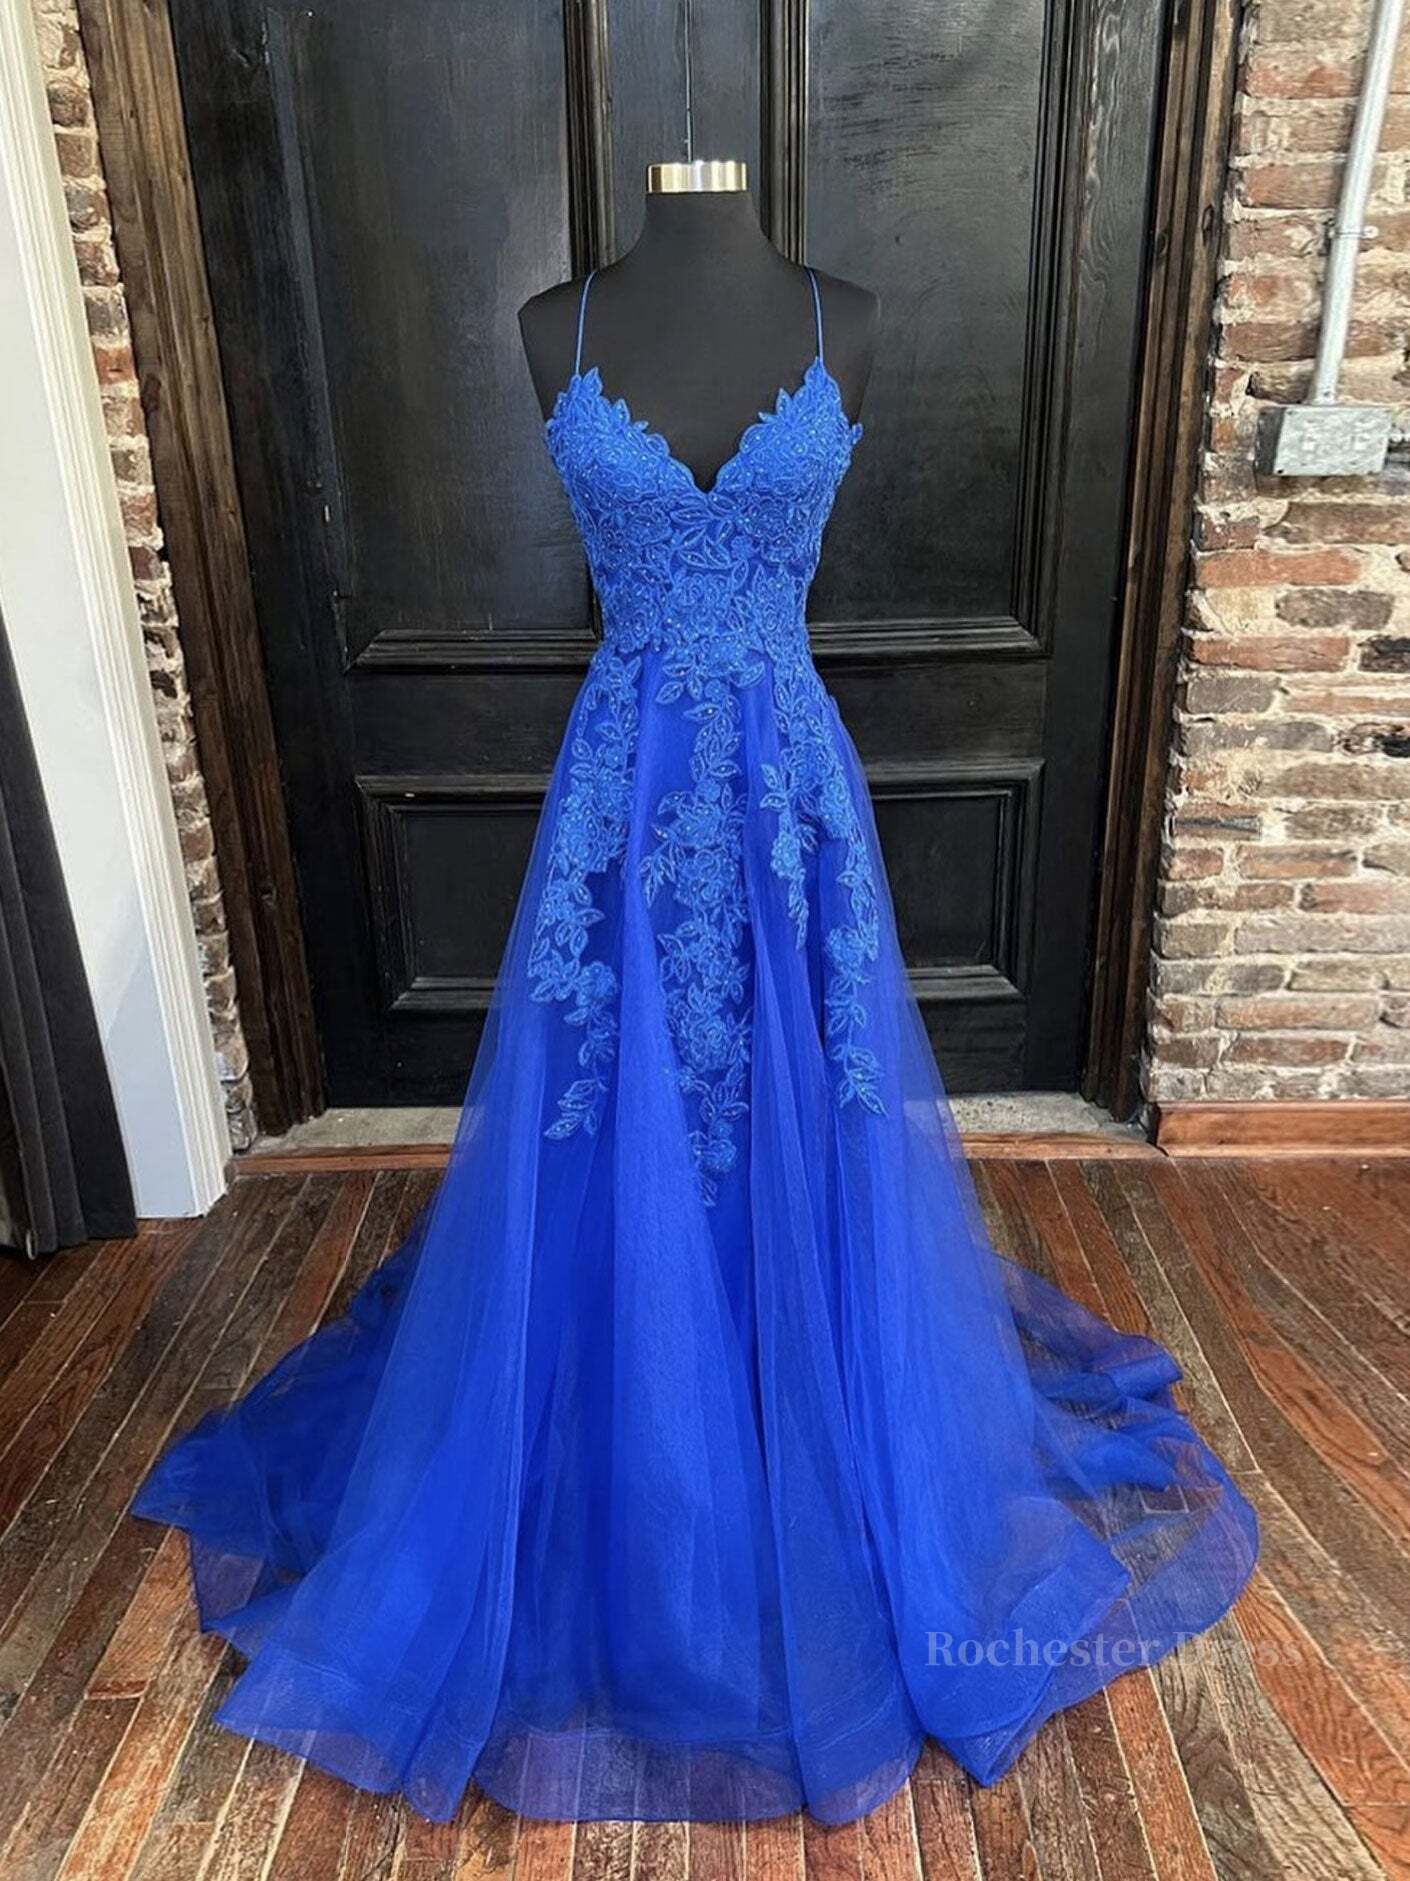 Blue v neck tulle lace long prom dress, blue lace bridesmaid dress